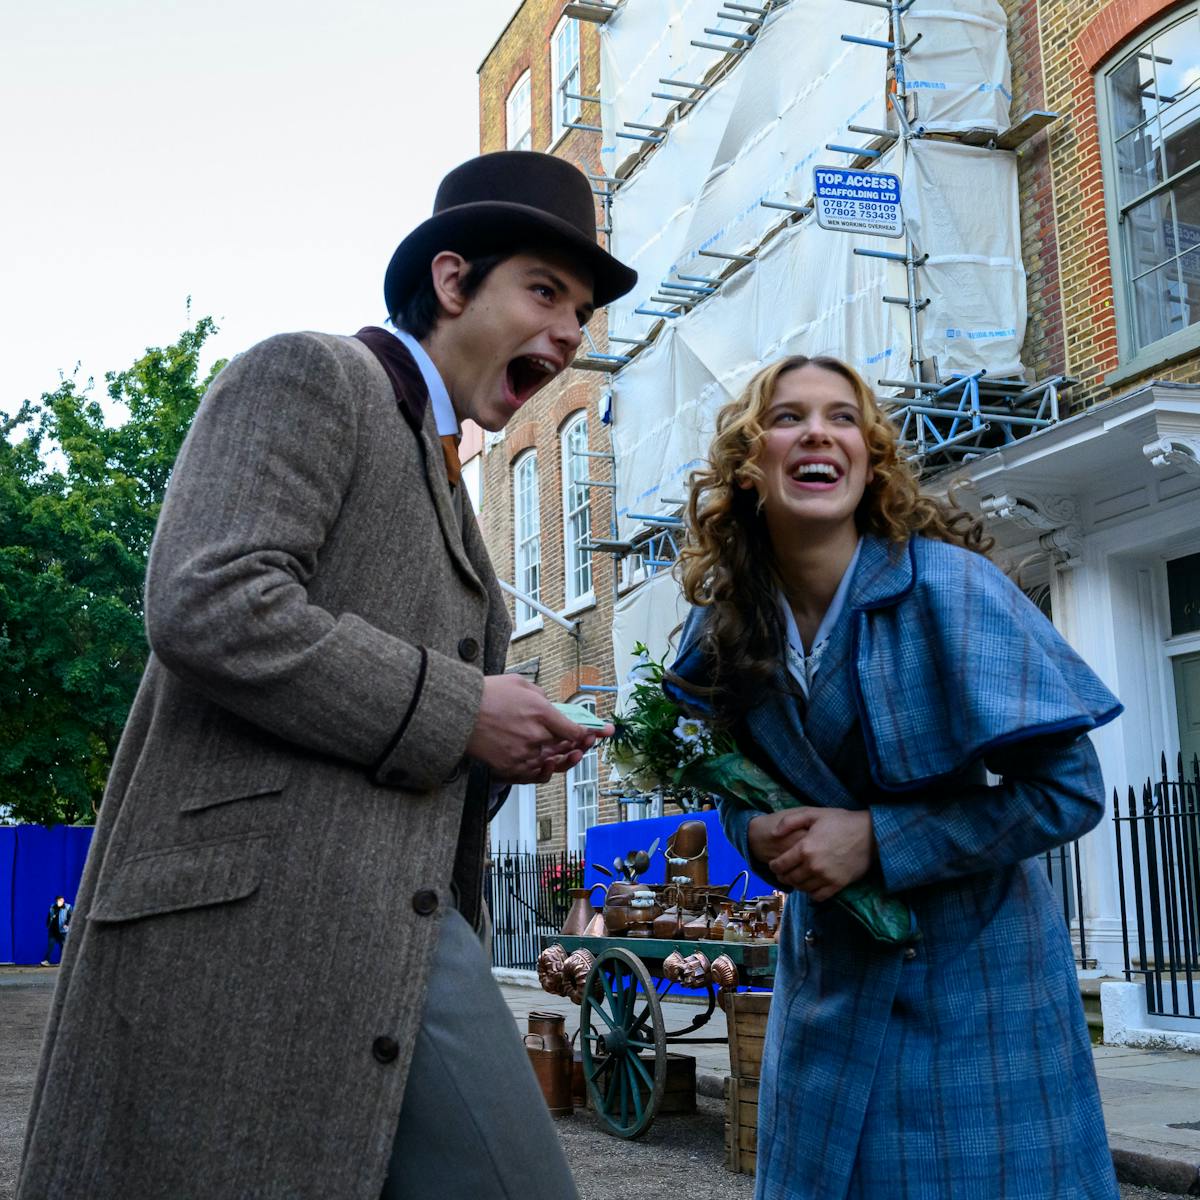  Tewkesbury (Louis Partridge) and Enola Holmes (Millie Bobby Brown) laugh in the street.